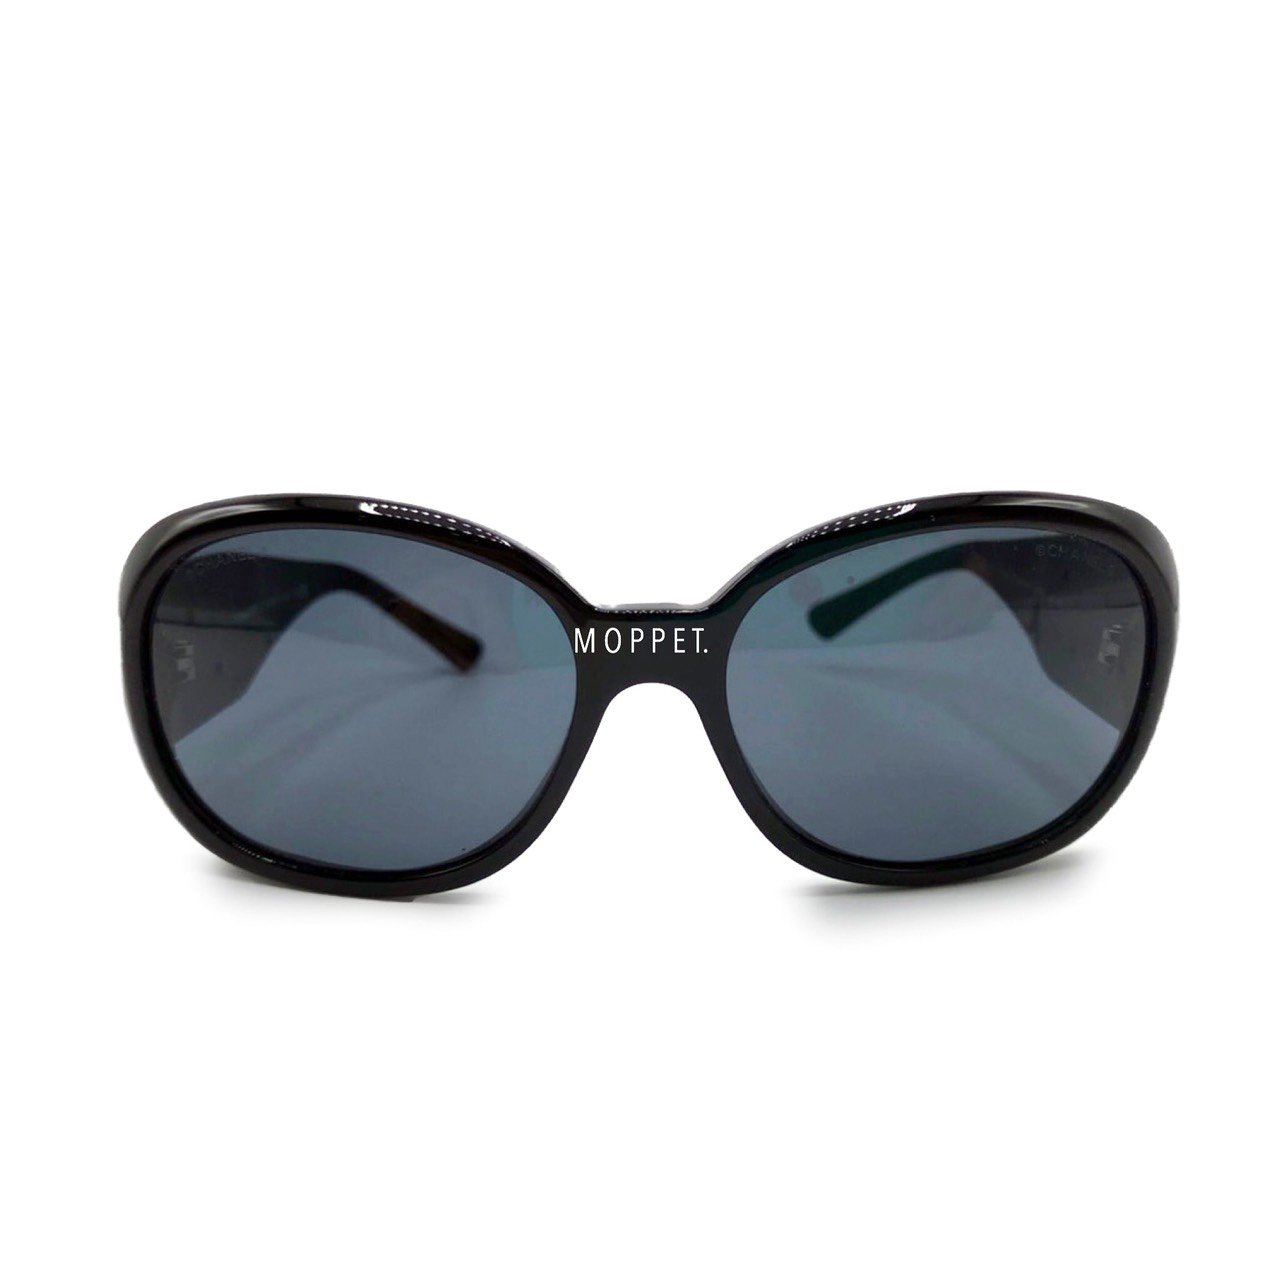 Used Chanel Sunglasses in Black/Black Lens - moppetbrandname